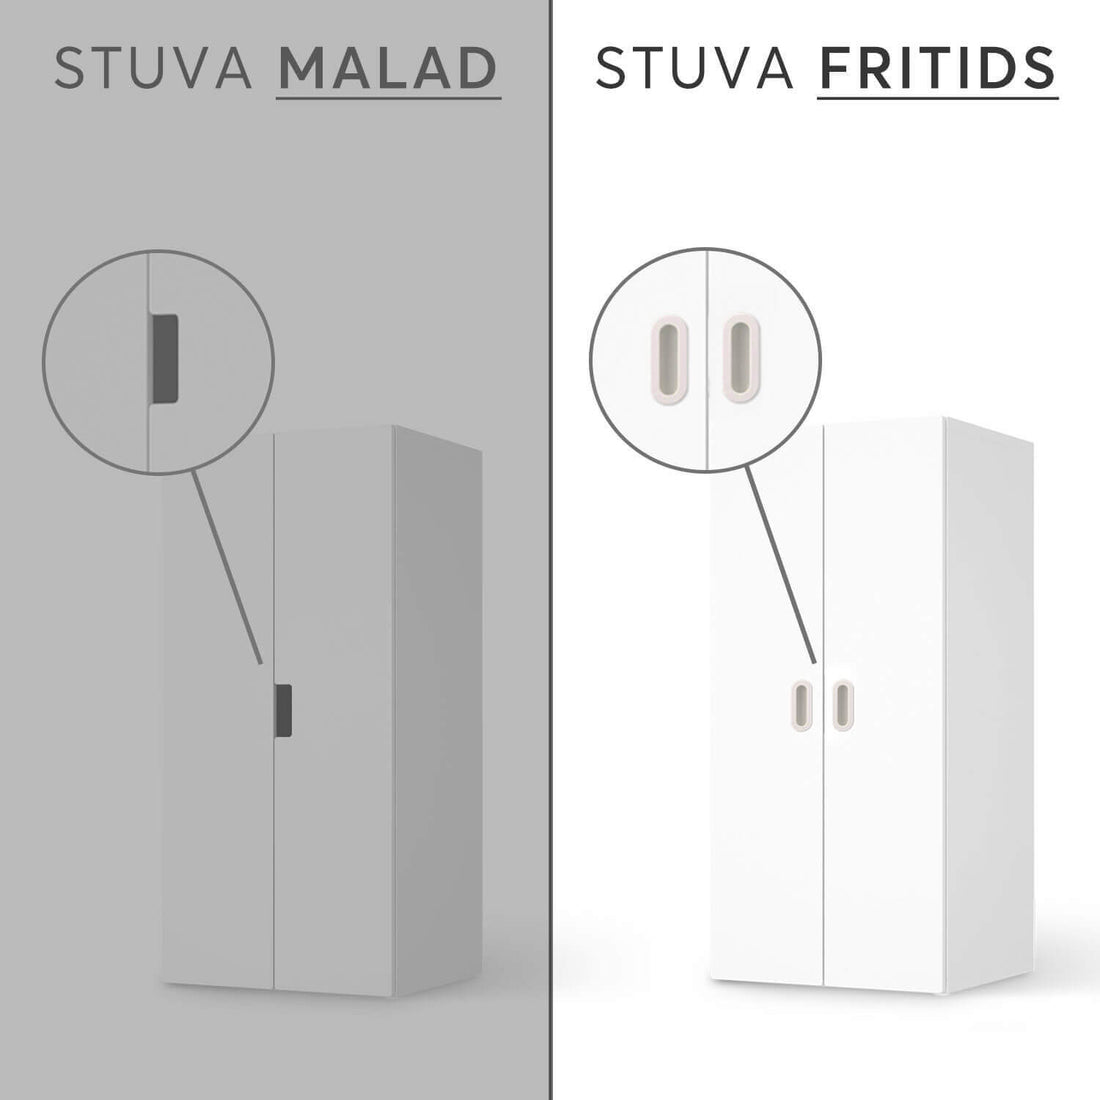 Vergleich IKEA Stuva Fritids / Malad - Füchse